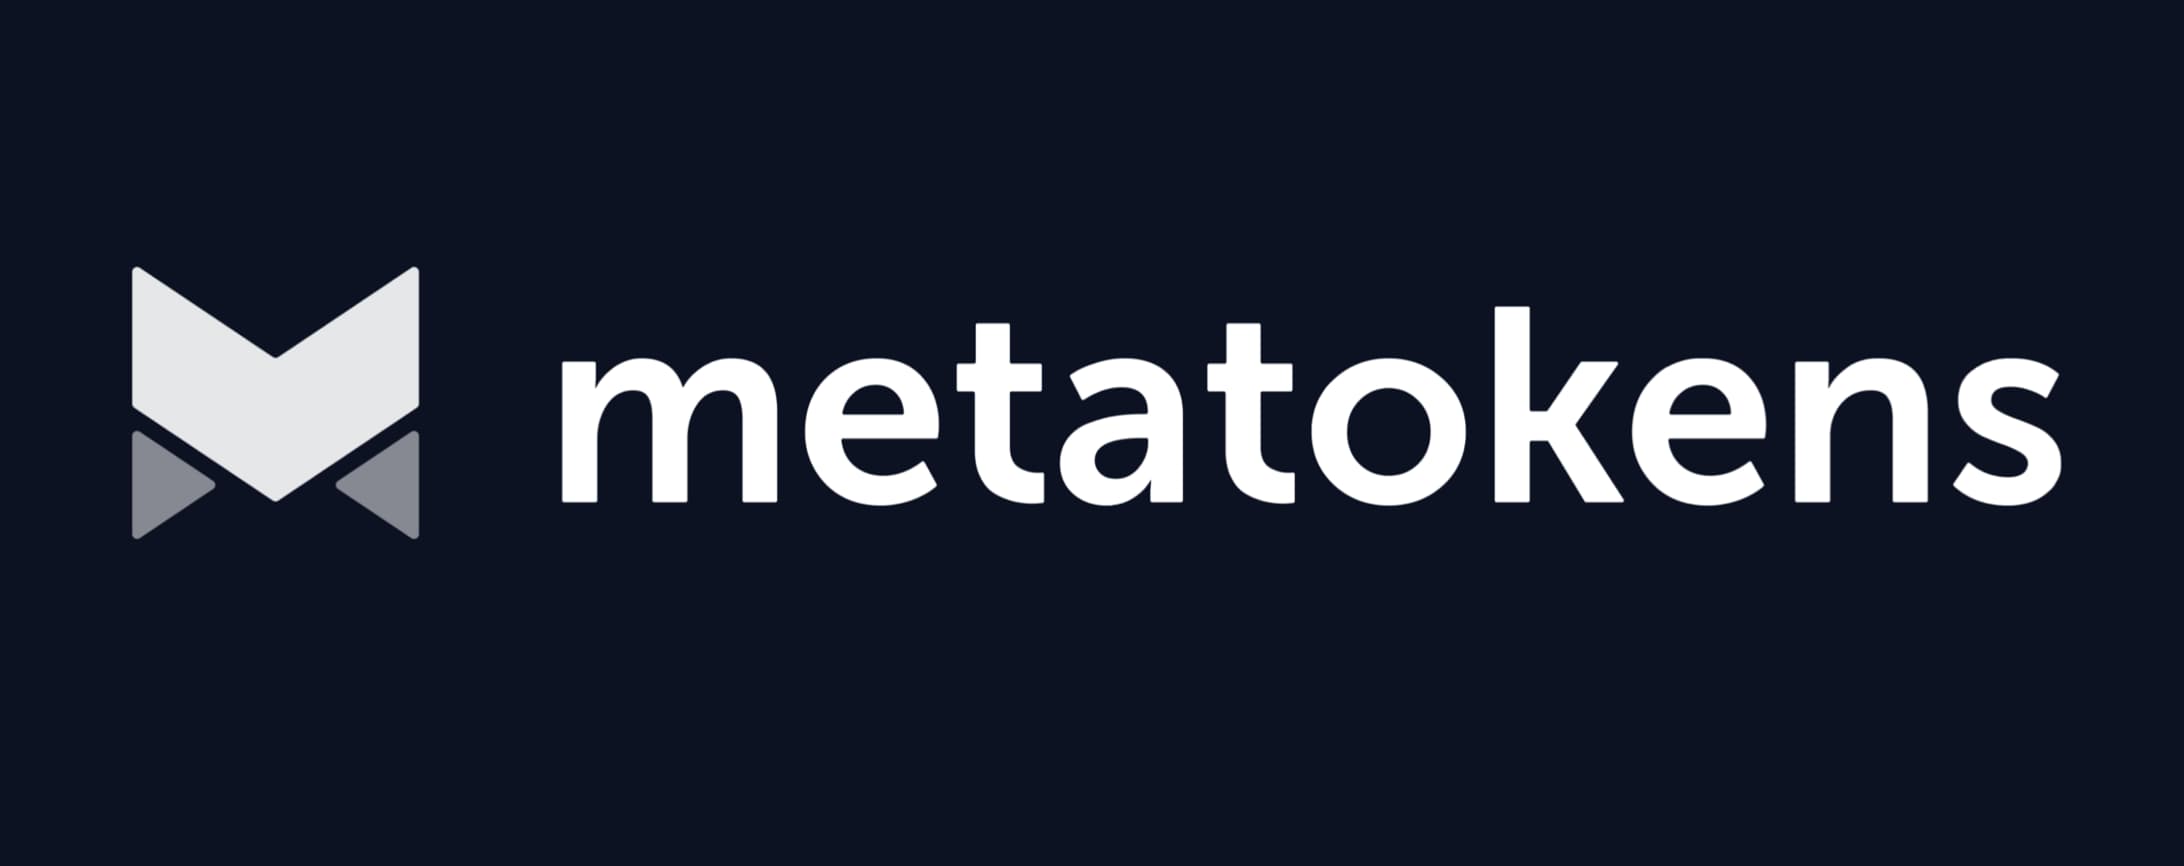 Metatokens